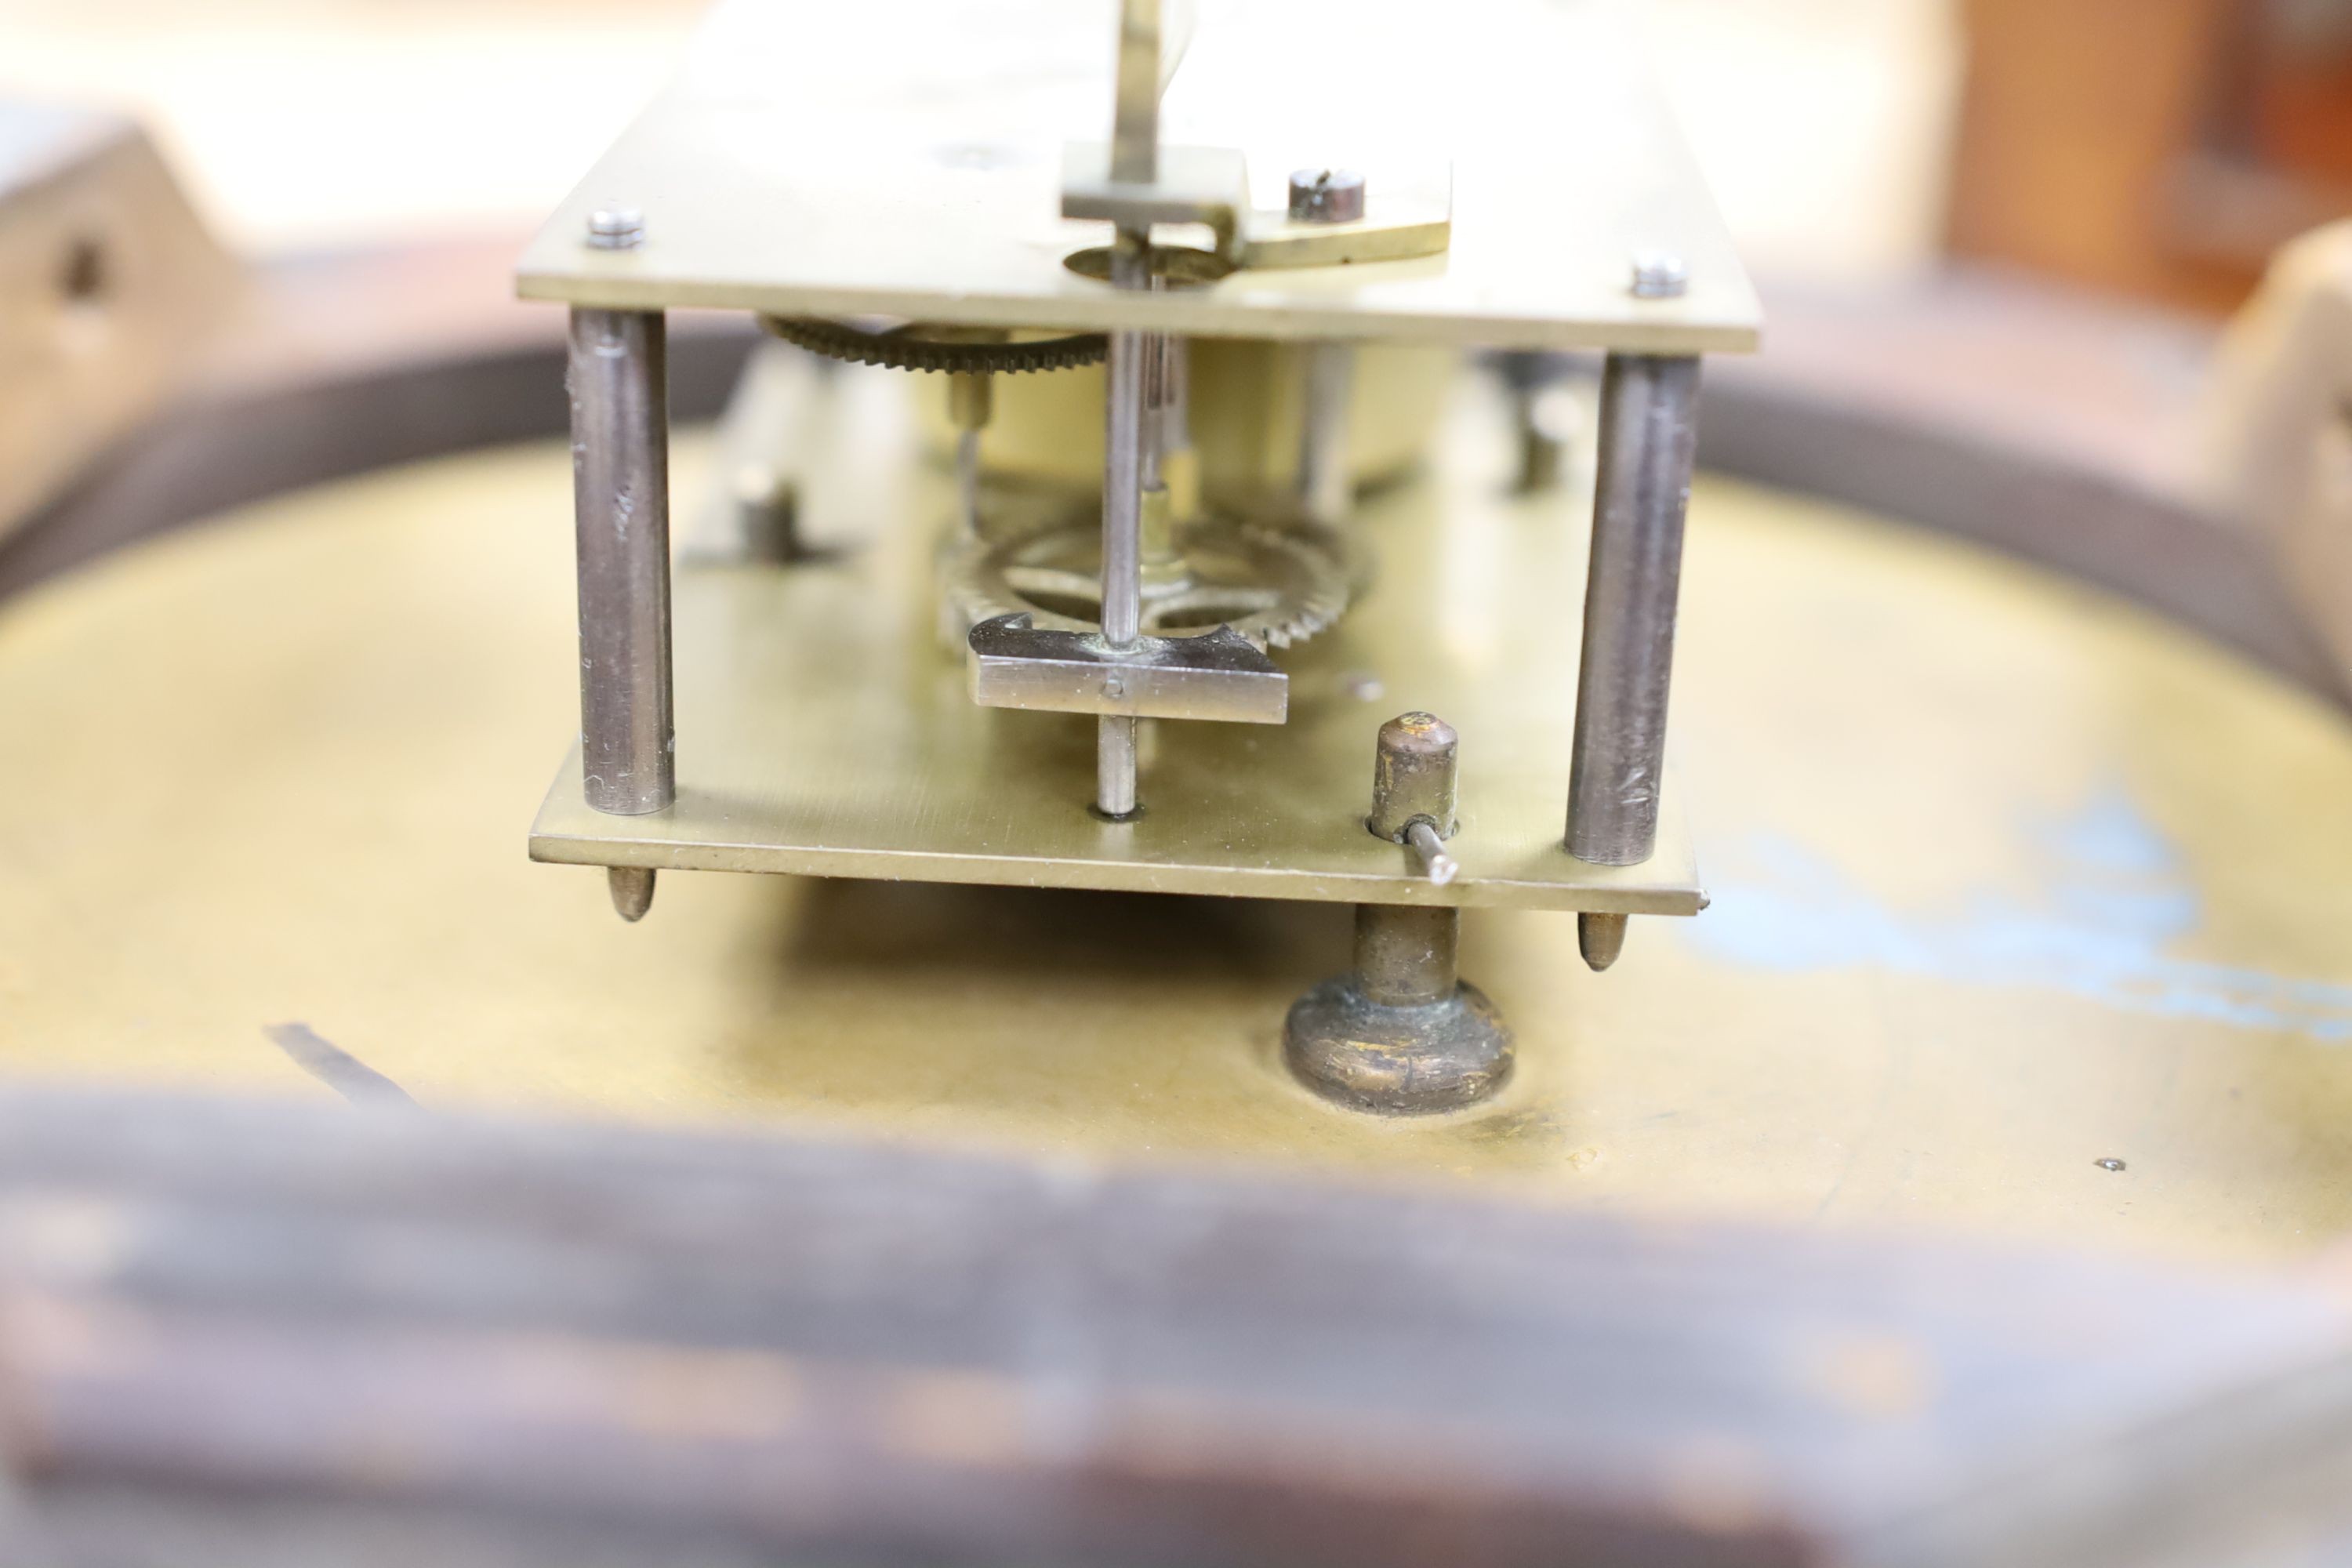 A Camera Kuss & Co. mahogany dial clock, 30 cms diameter.